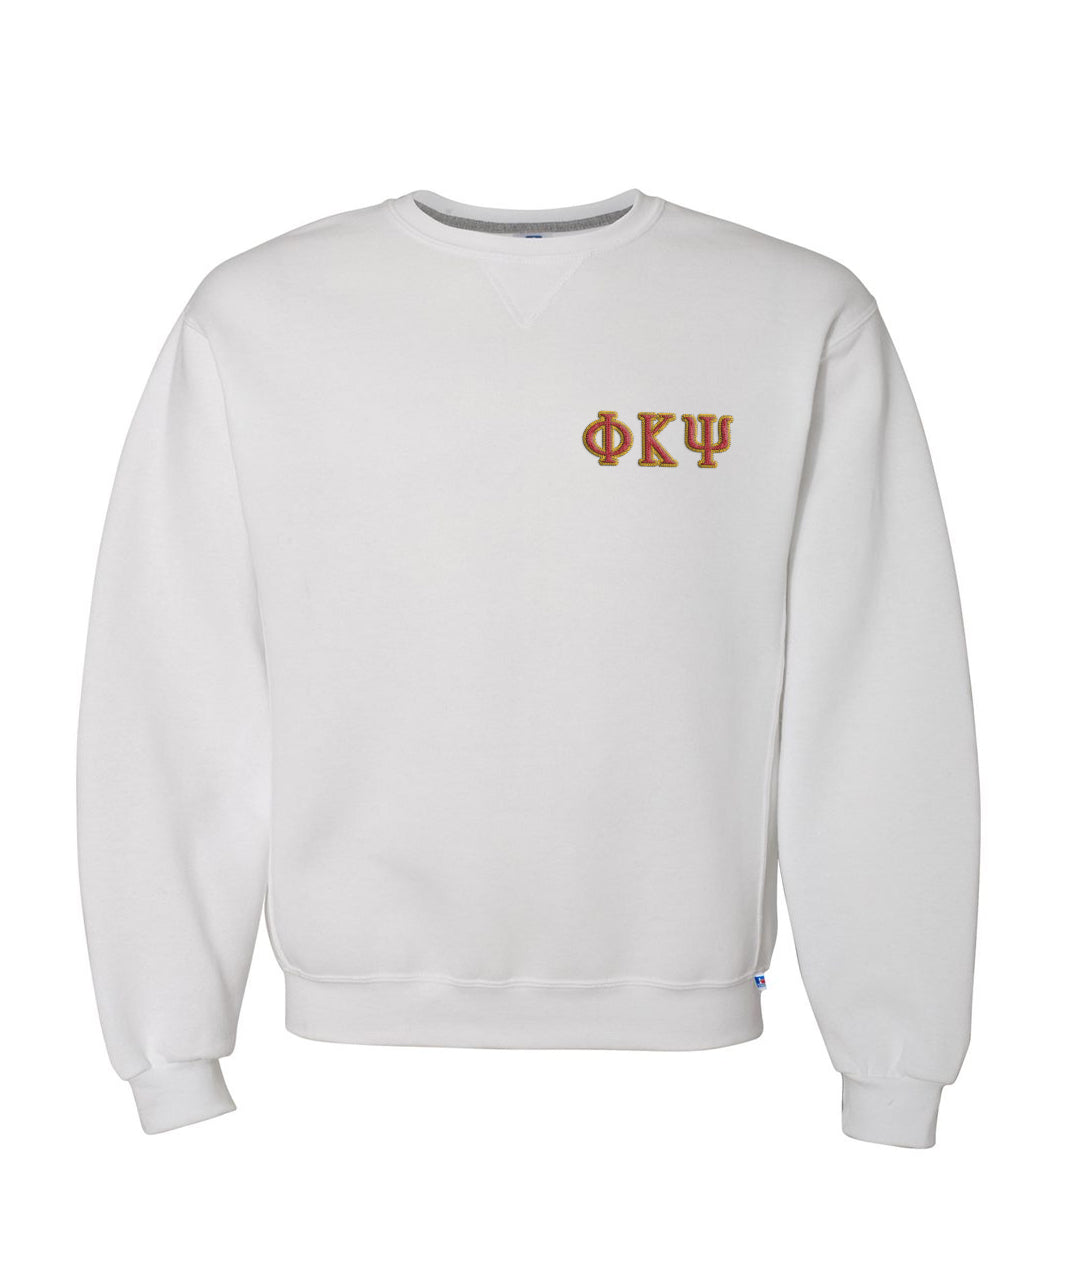 Phi Kappa Psi Embroidered Crewneck Sweatshirt